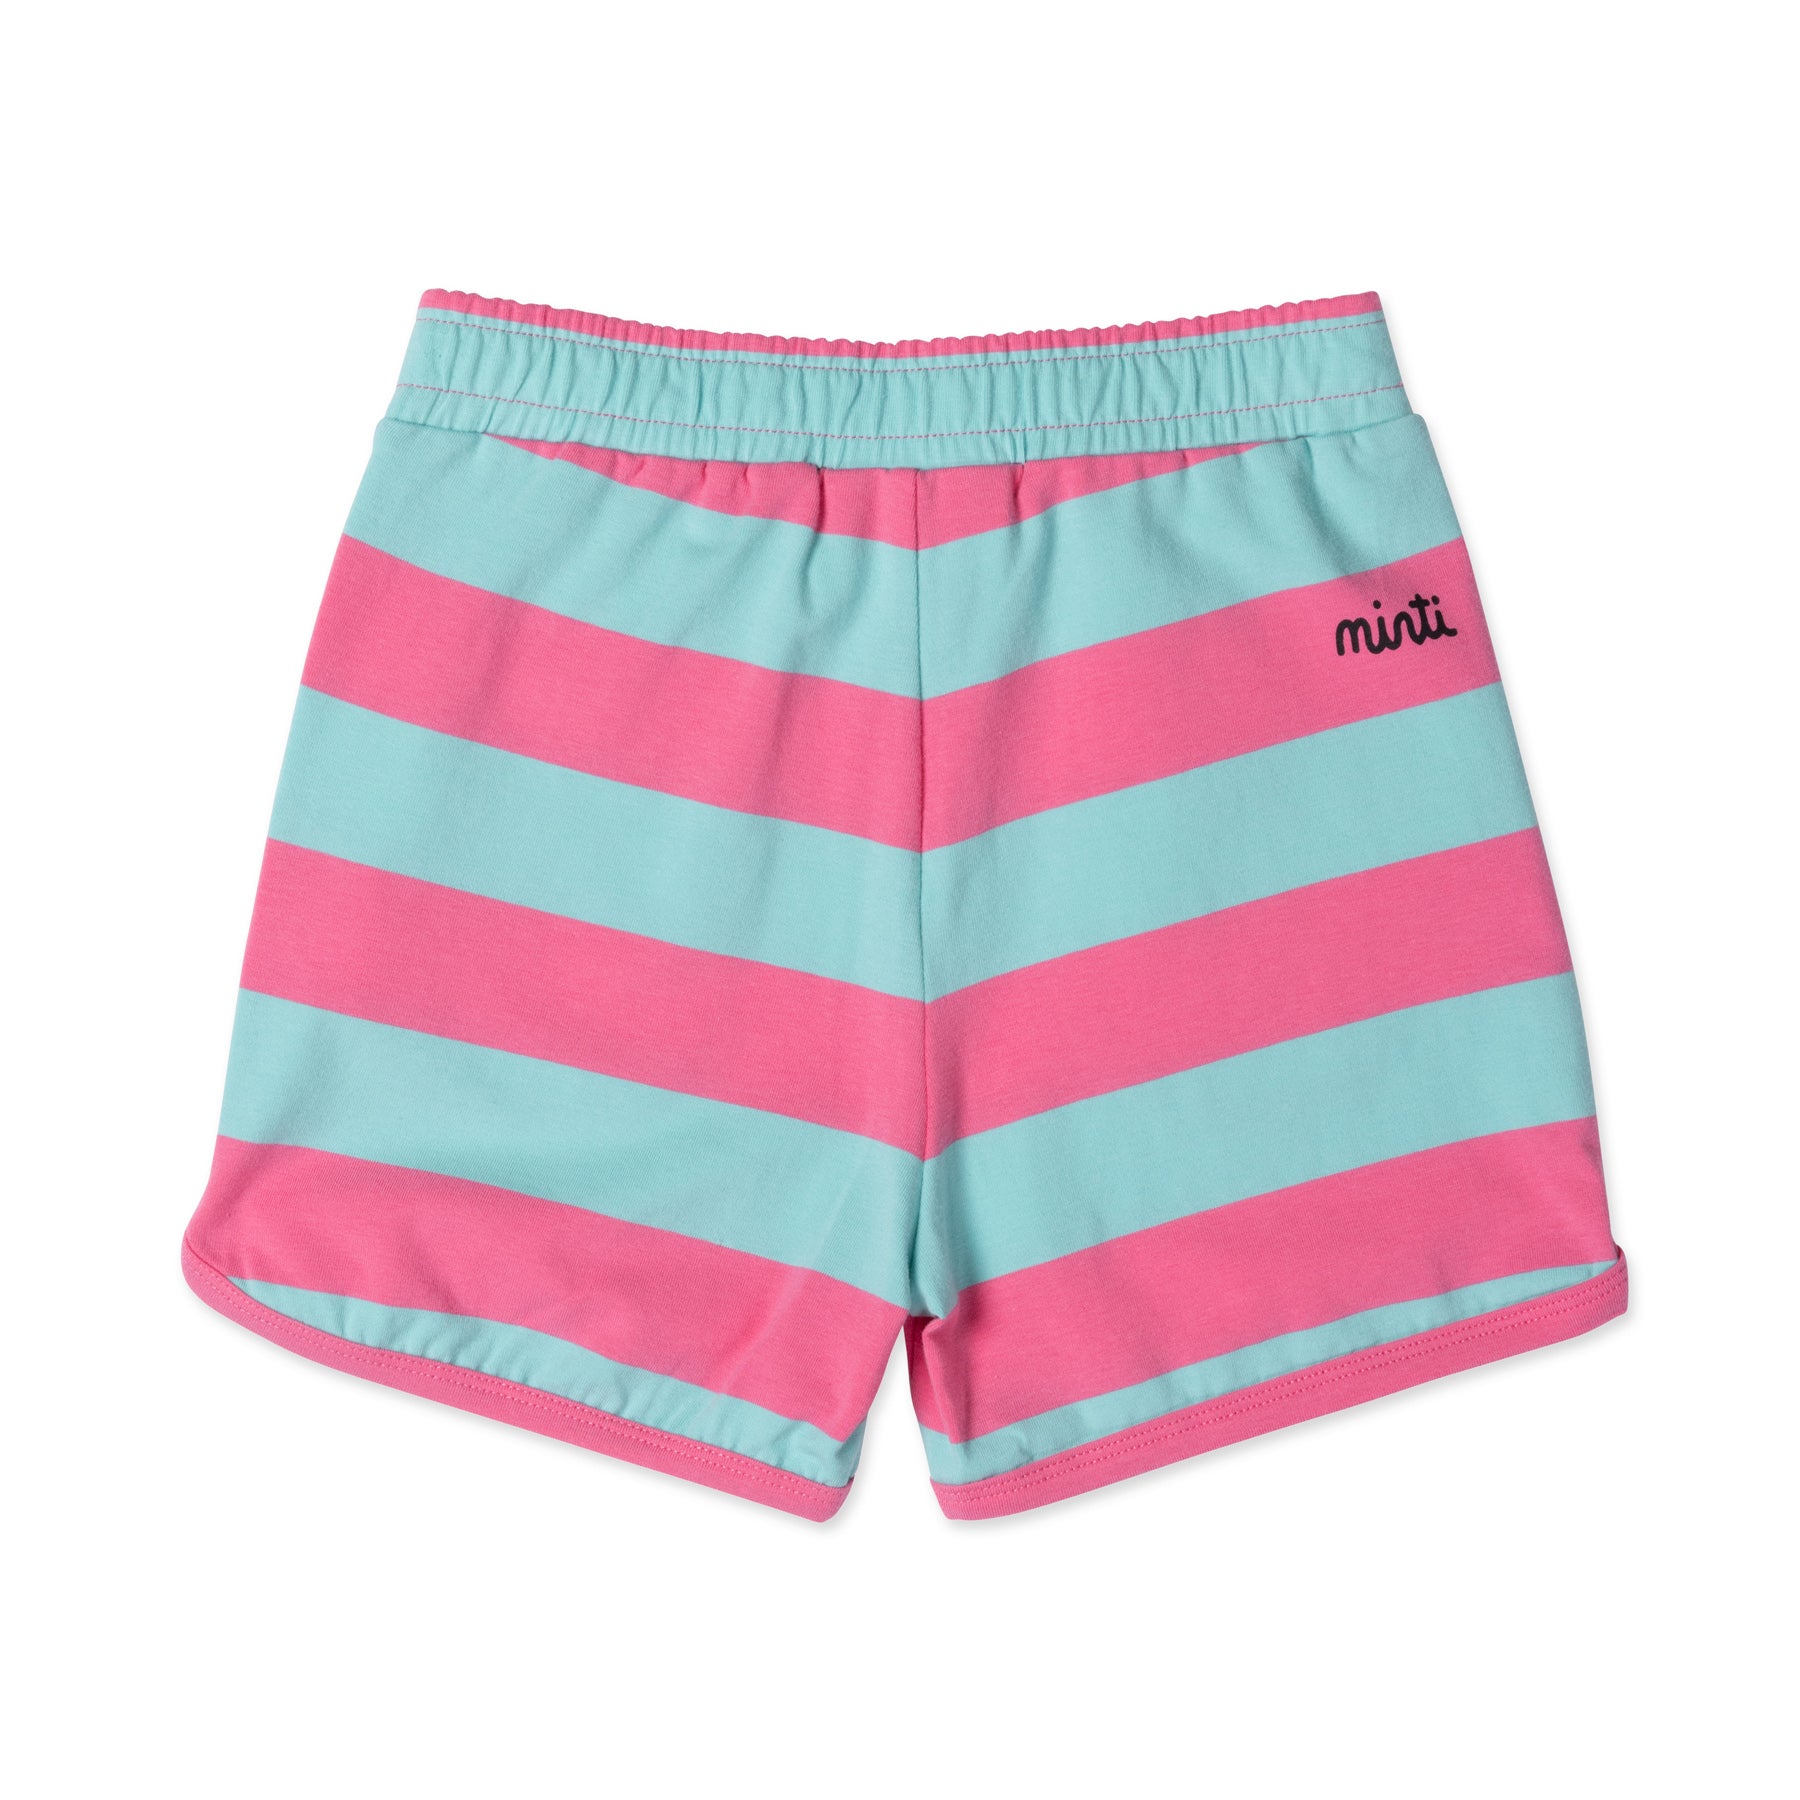 PRE ORDER - Minti - Striped Sport Short - Pink/Teal Stripe